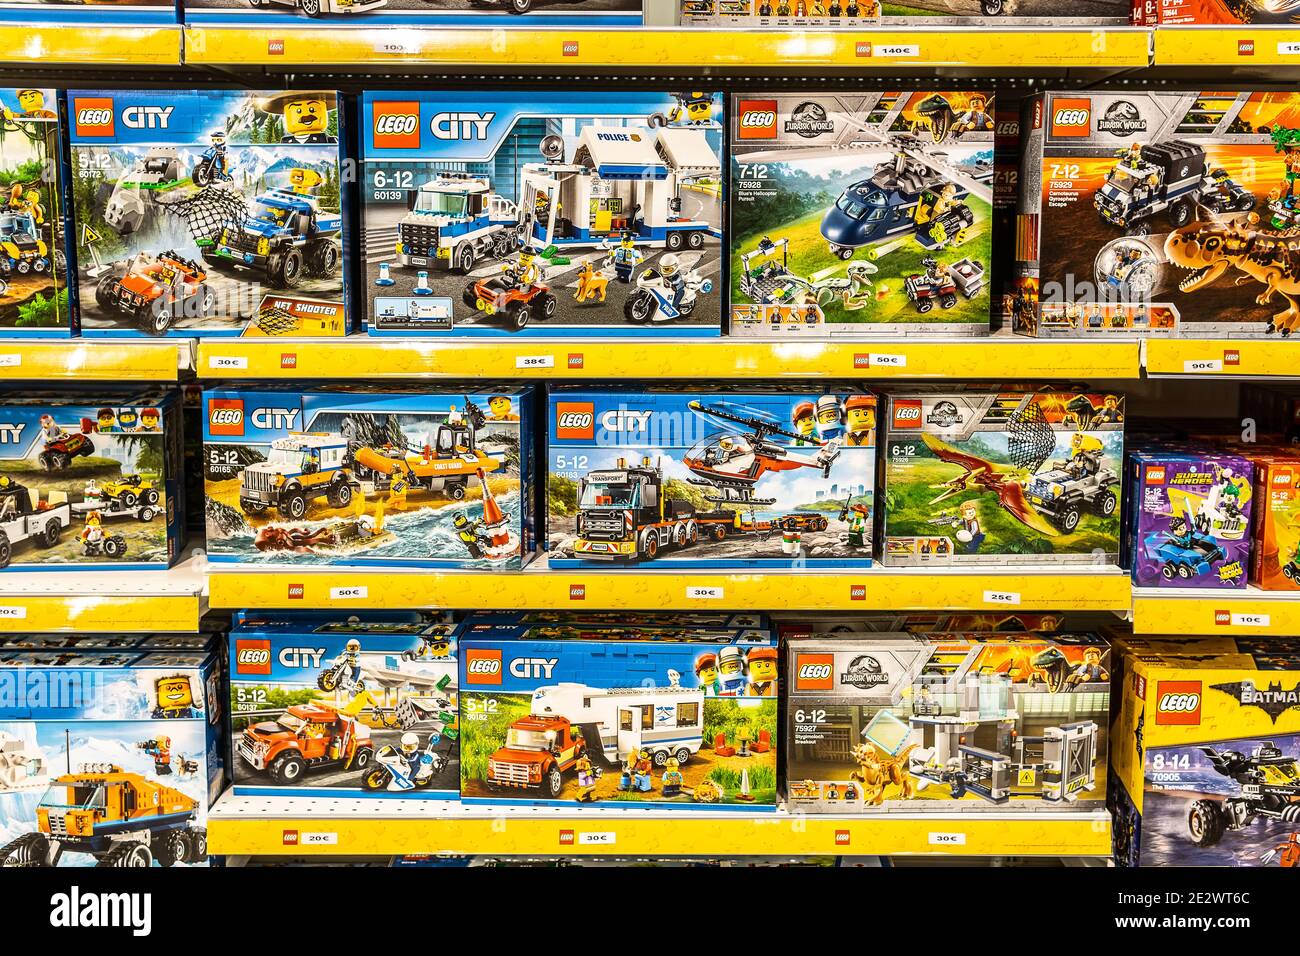 Coffret LEGO sur le magasin à vendre, Lego Star Wars, Speed, Super Heroes, City, Juniors, Classic, Duplo, Creator, Technic, Friends, Ninjago, Elves, Banque D'Images